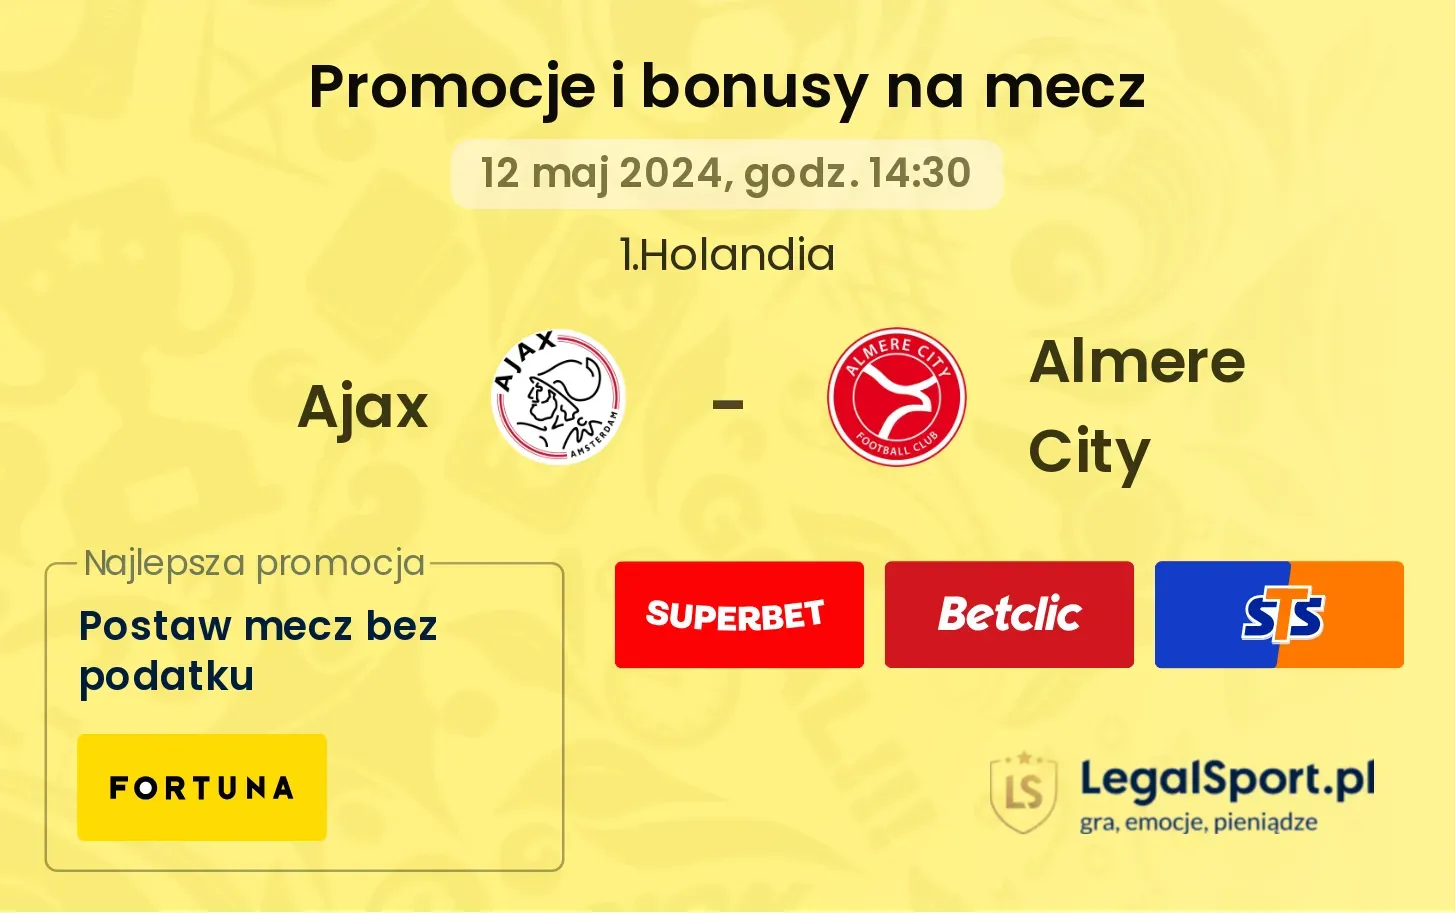 Ajax - Almere City promocje i bonusy (12.05, 14:30)